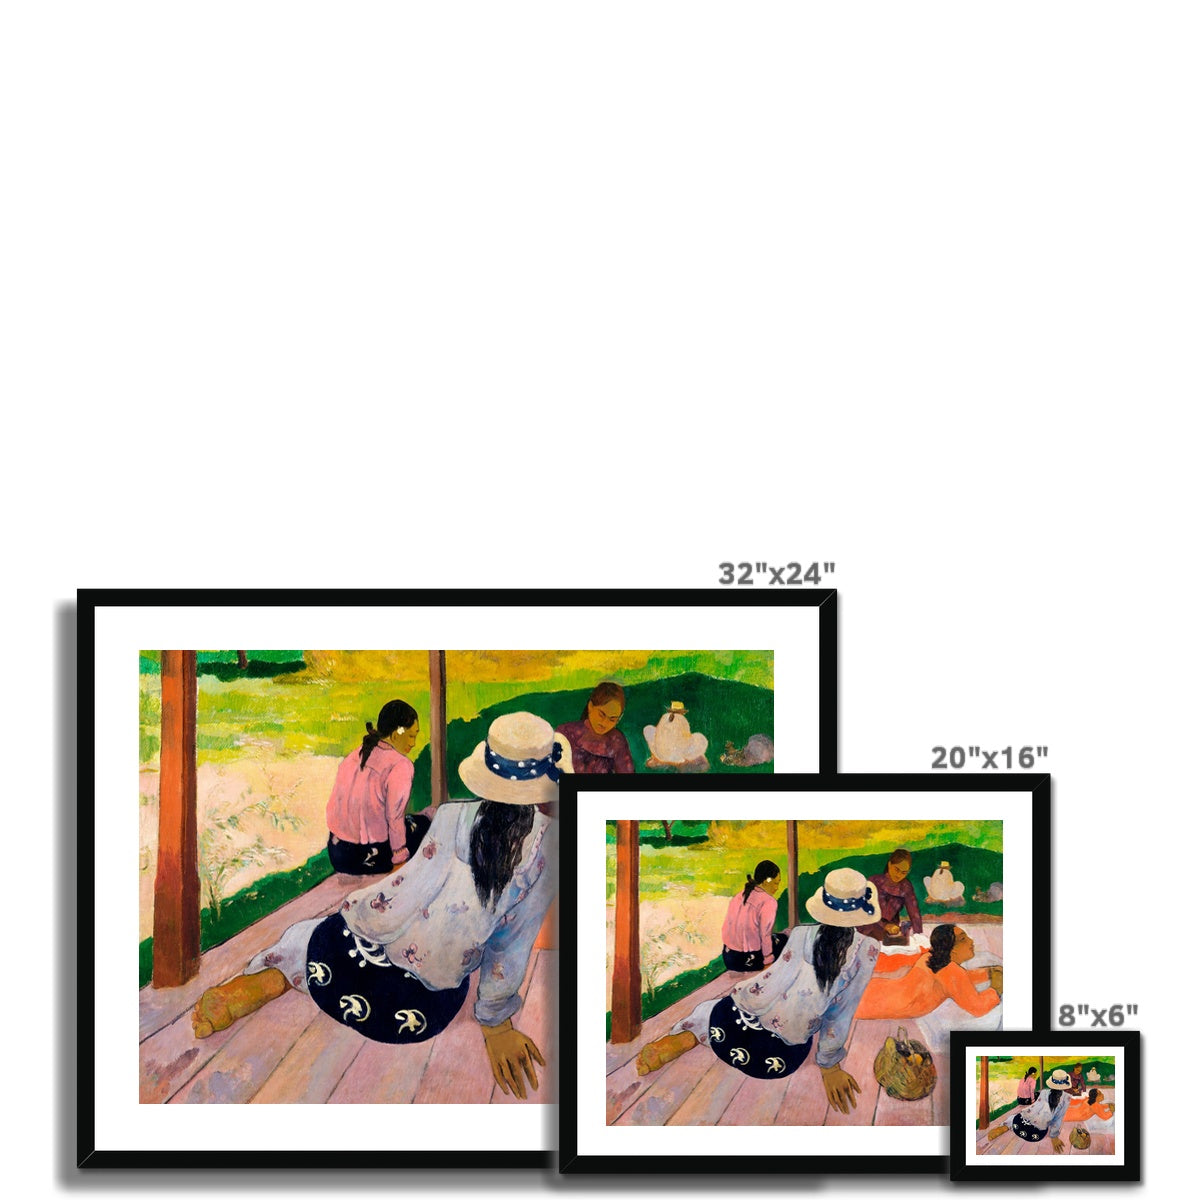 Gauguin - The Siesta gerahmtes Poster - Atopurinto